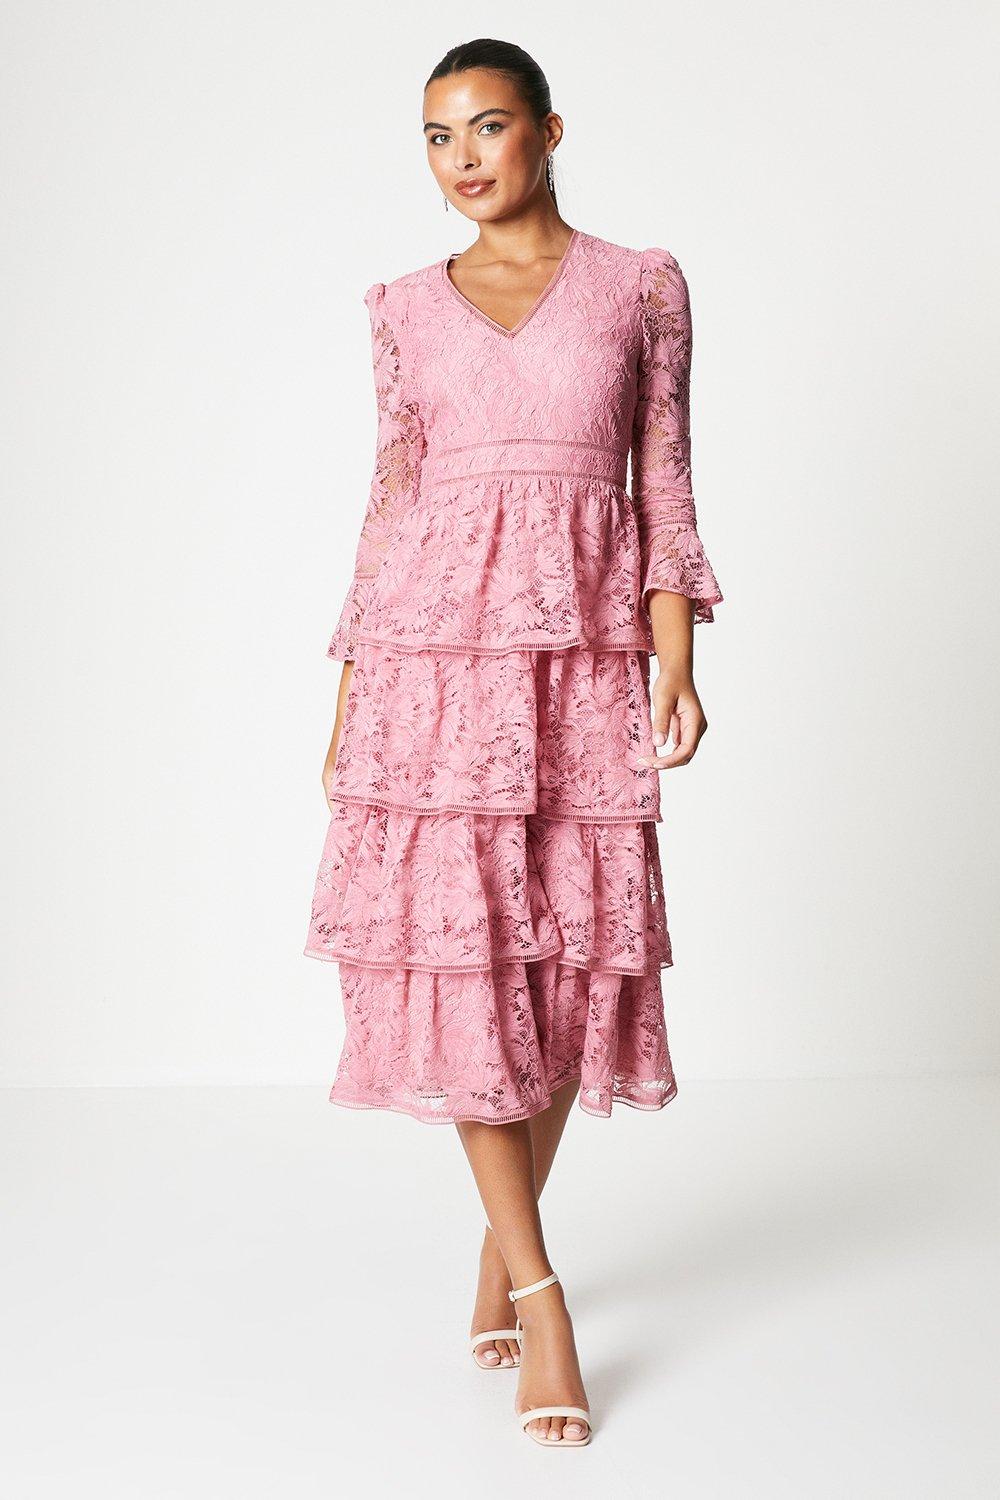 Layered Lace Dress With Ruffle Sleeve - Pink